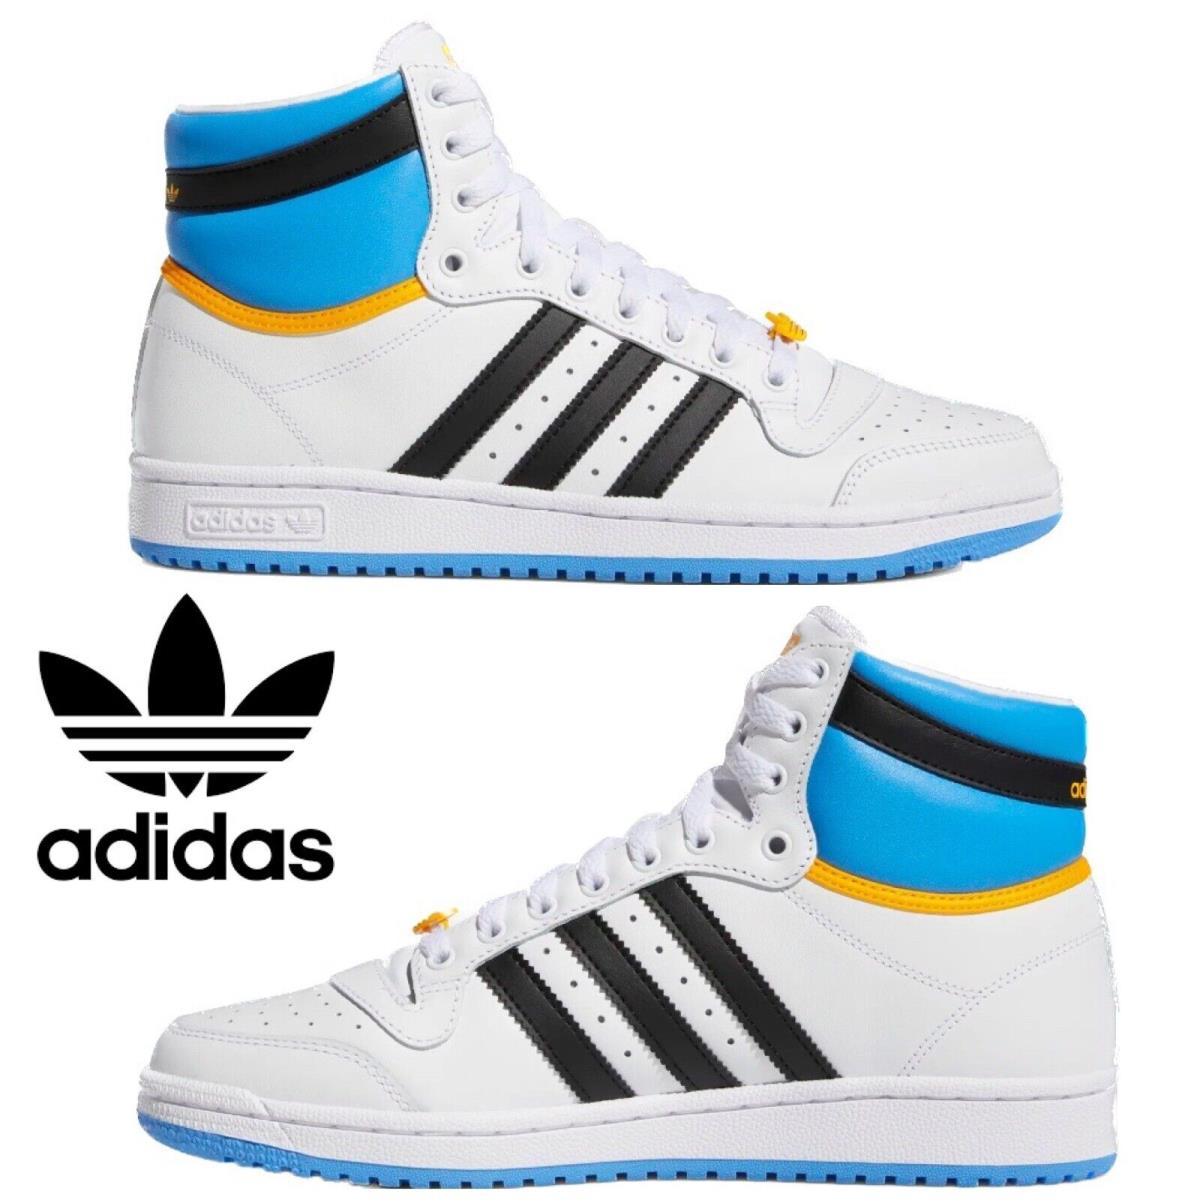 Adidas Originals Top Ten Hi Men`s Sneakers Comfort Casual Shoes Black White Blue